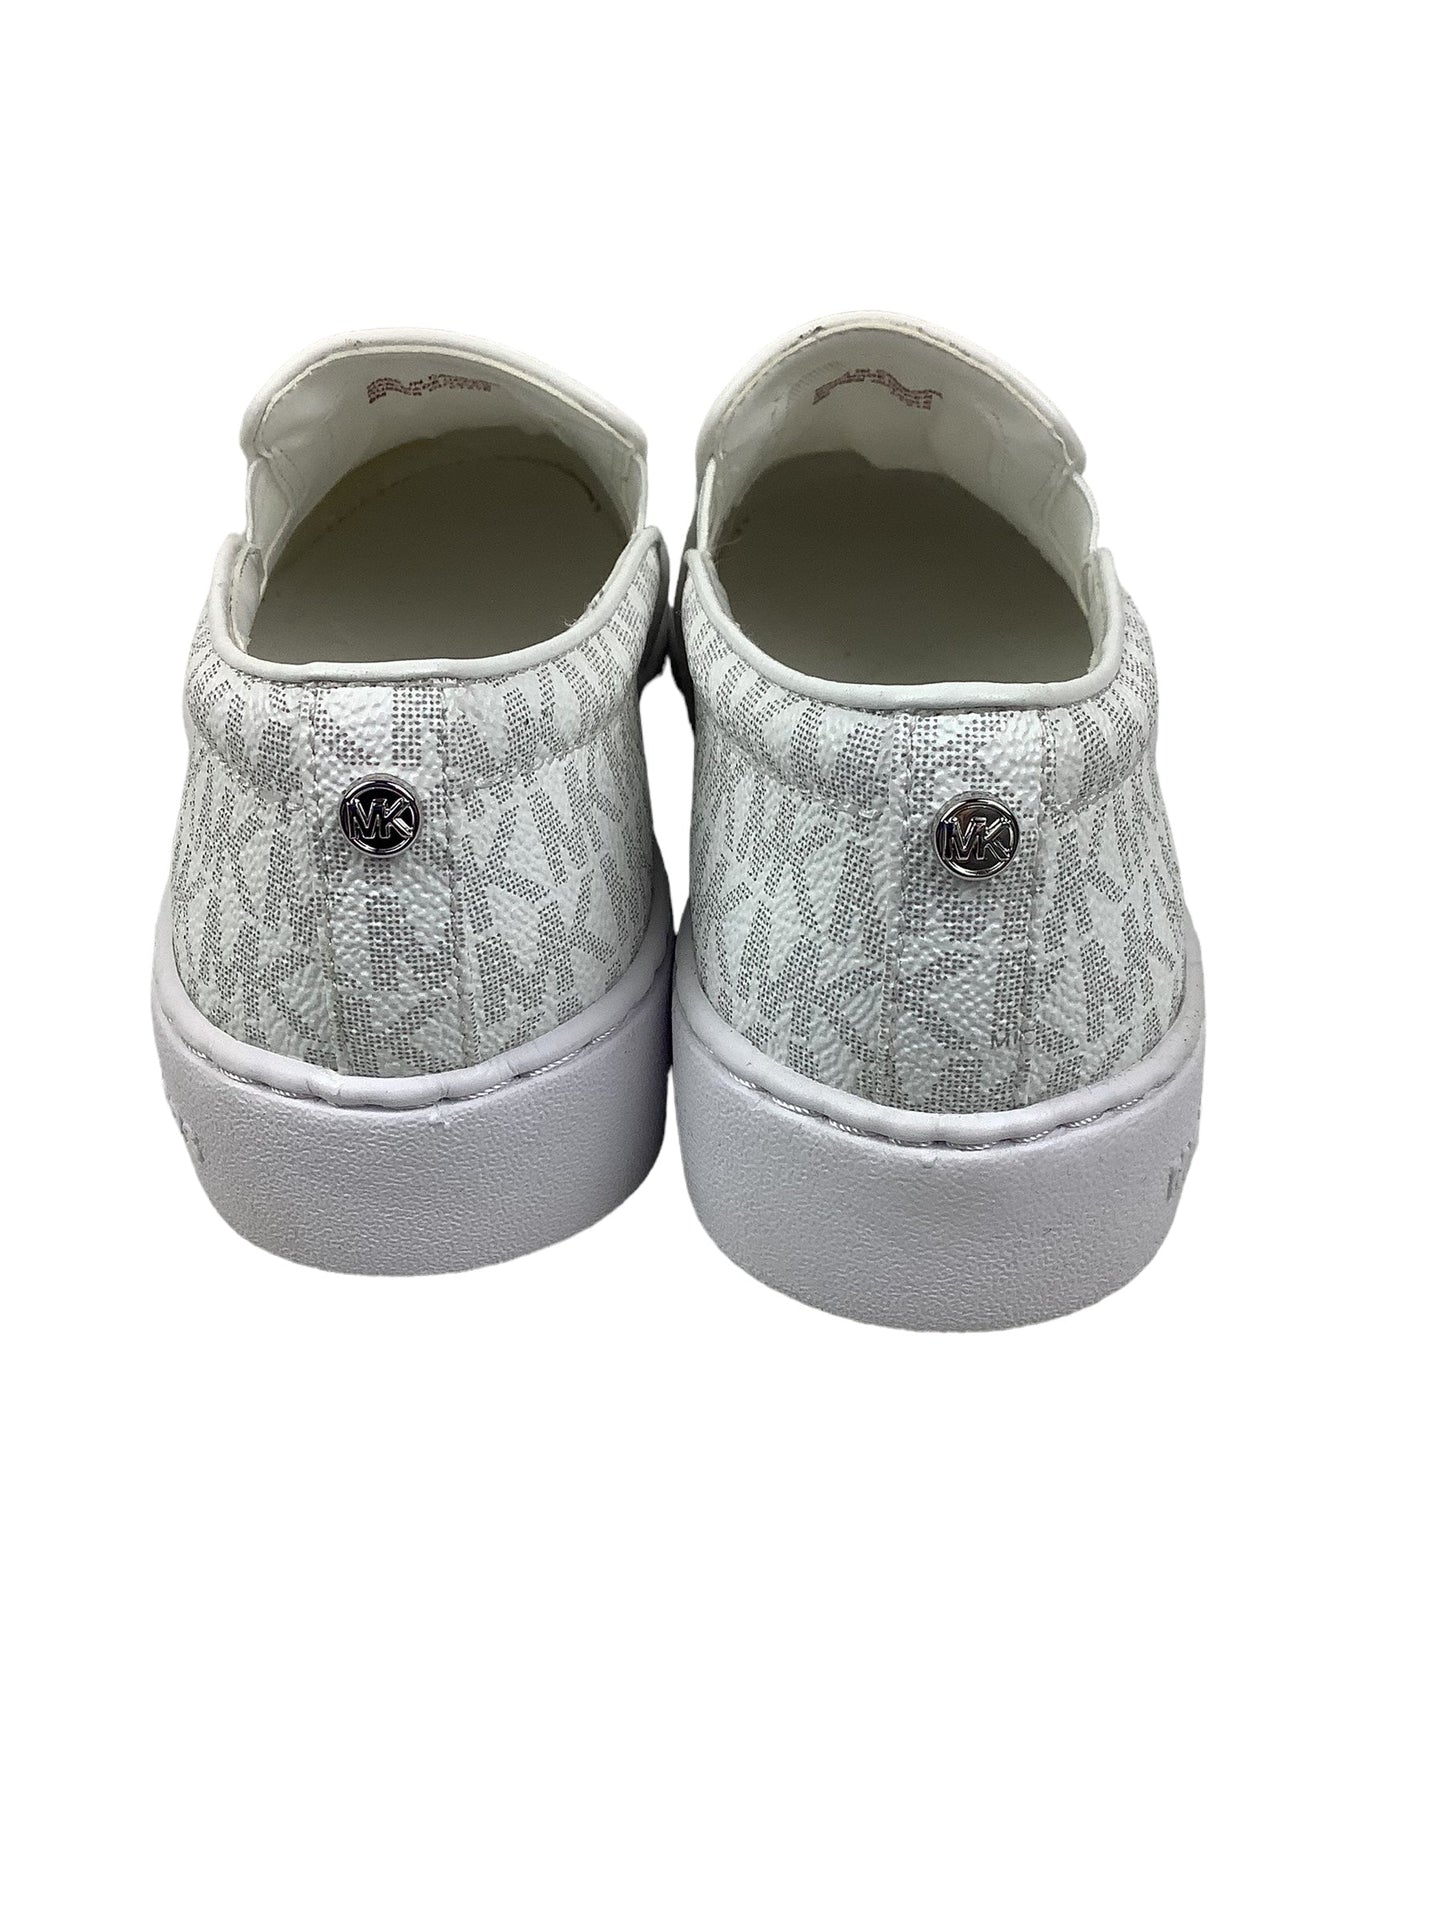 White Shoes Flats Michael By Michael Kors, Size 6